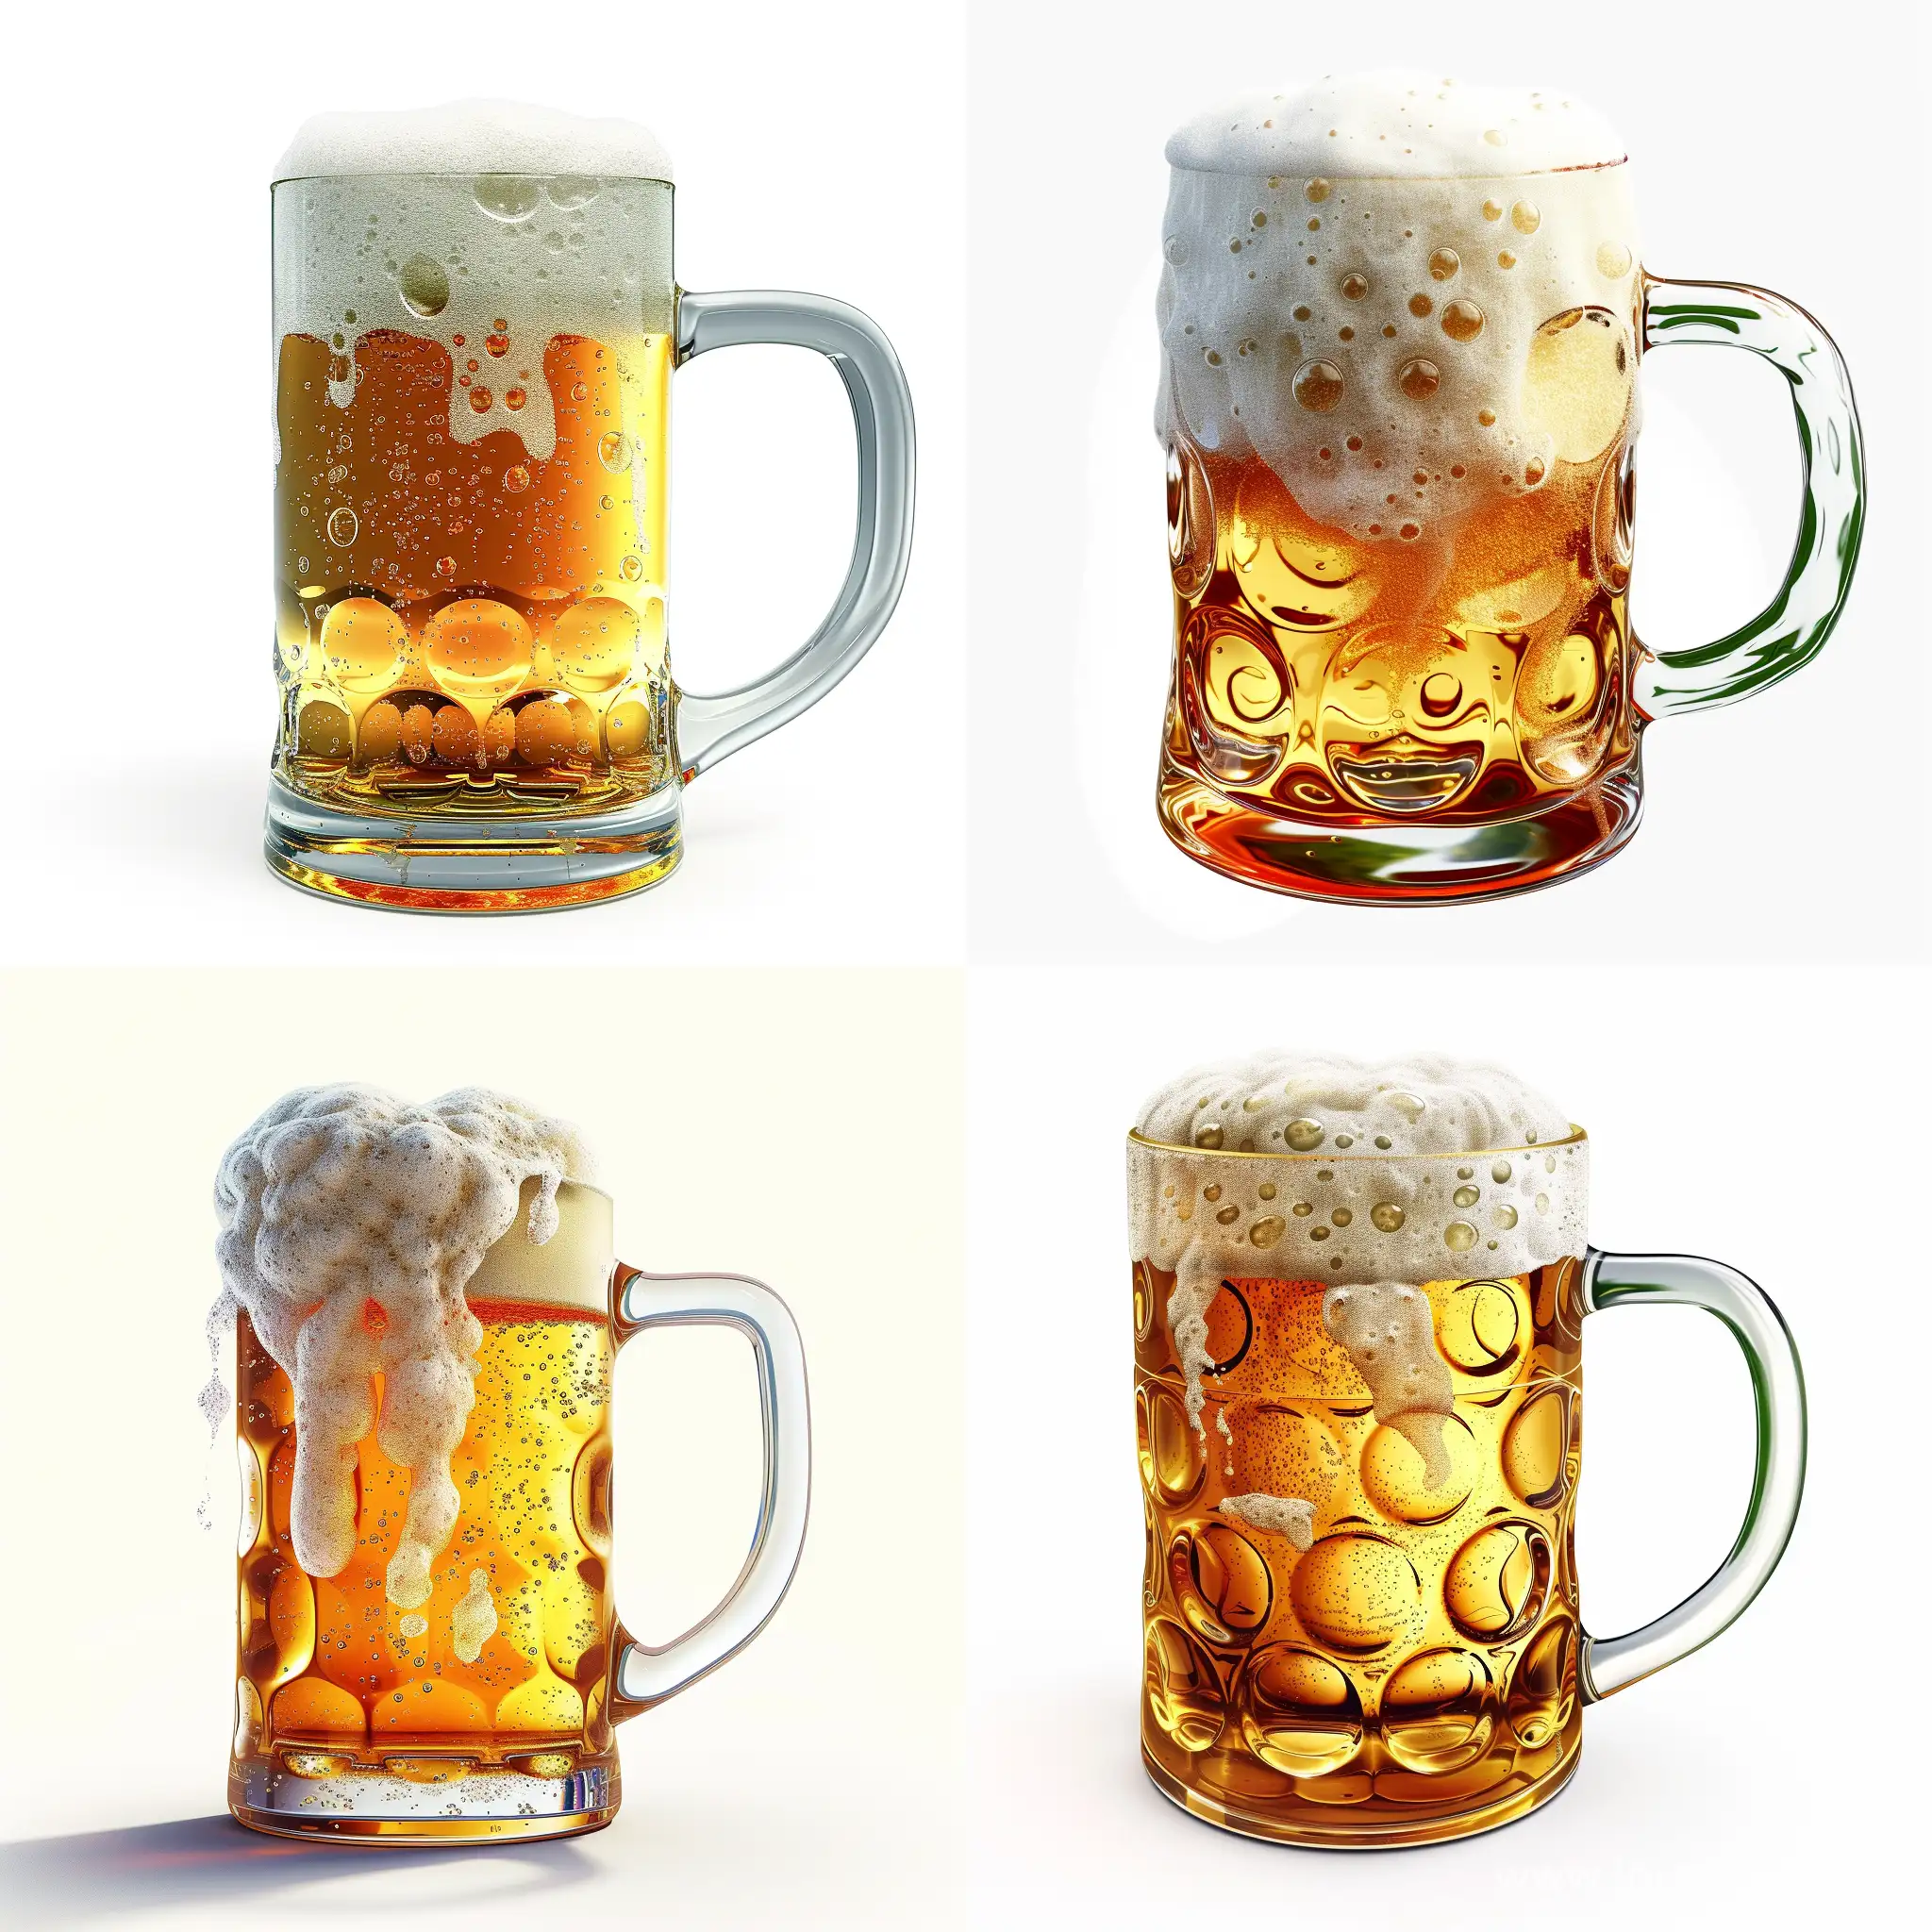 Foamy-Beer-Mug-Digital-Illustration-in-High-Definition